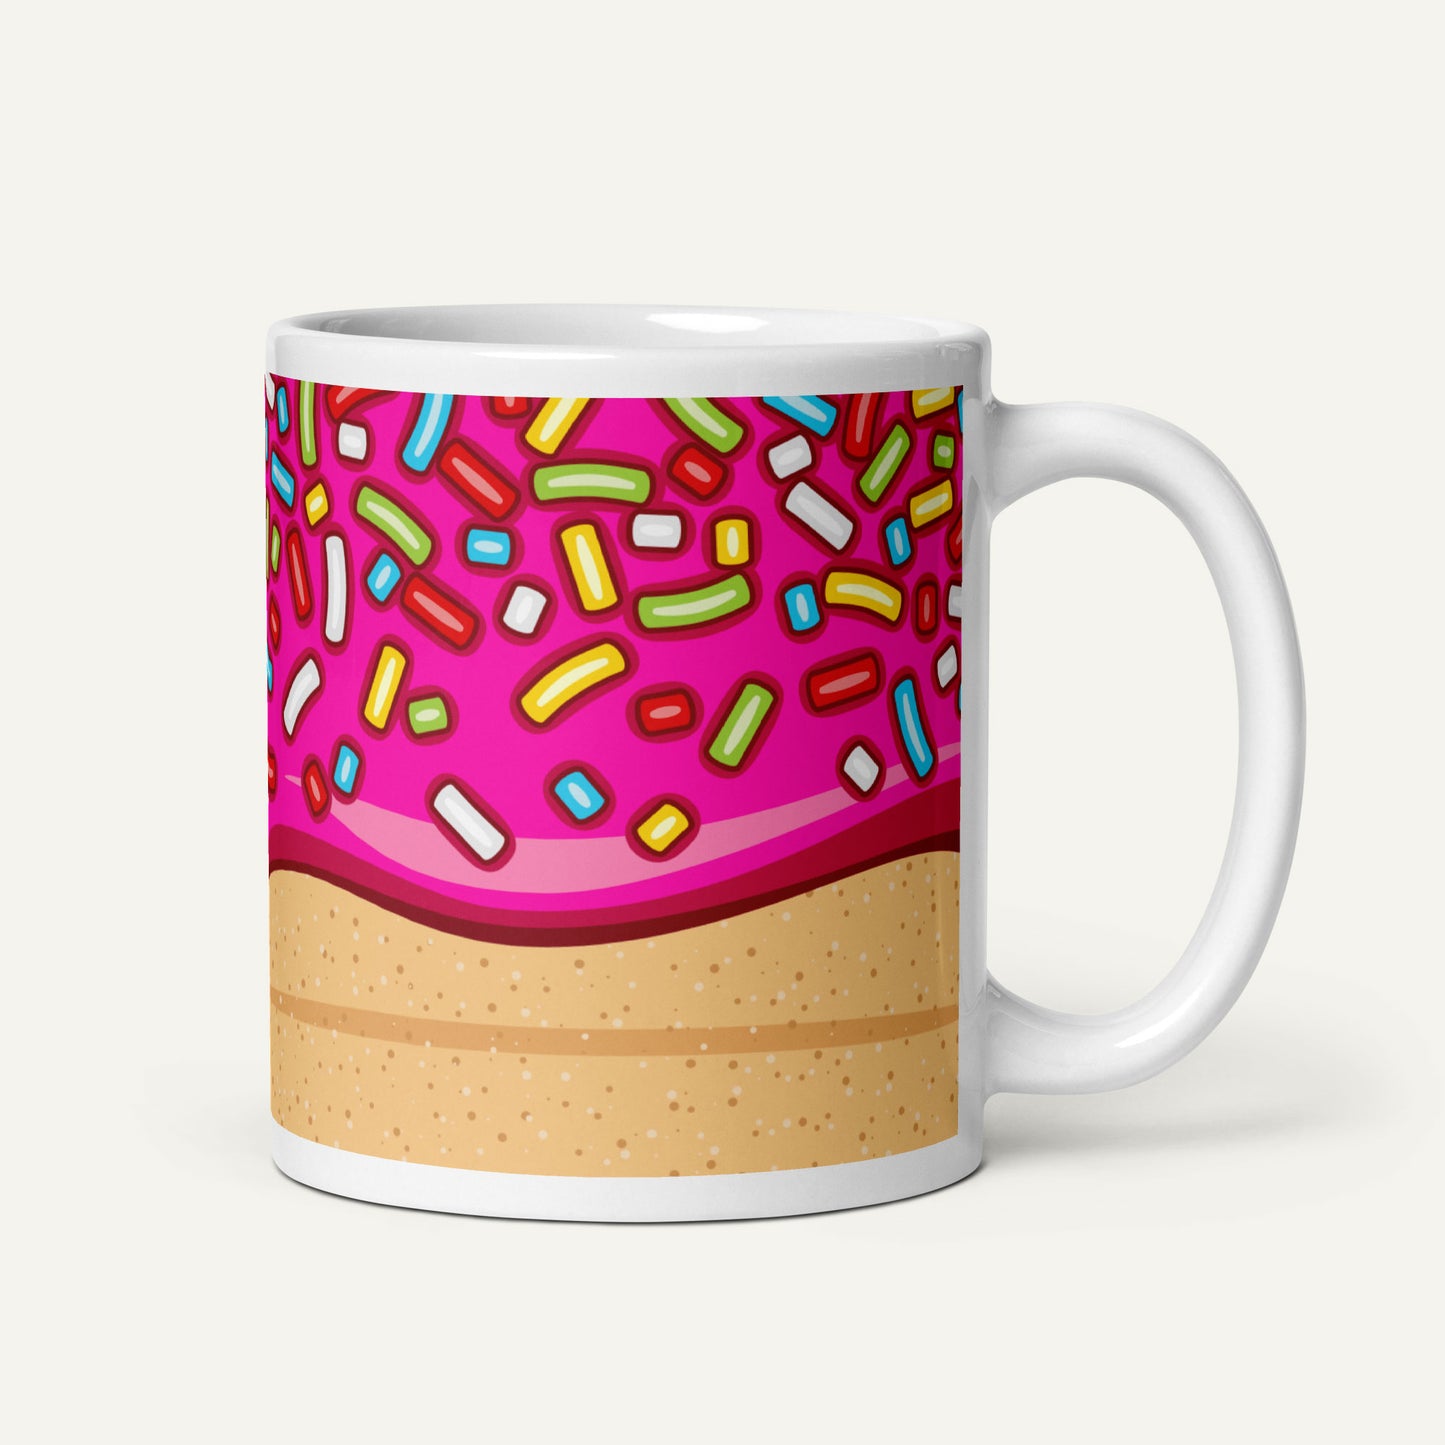 Pink Glazed Donut With Sprinkles Mug